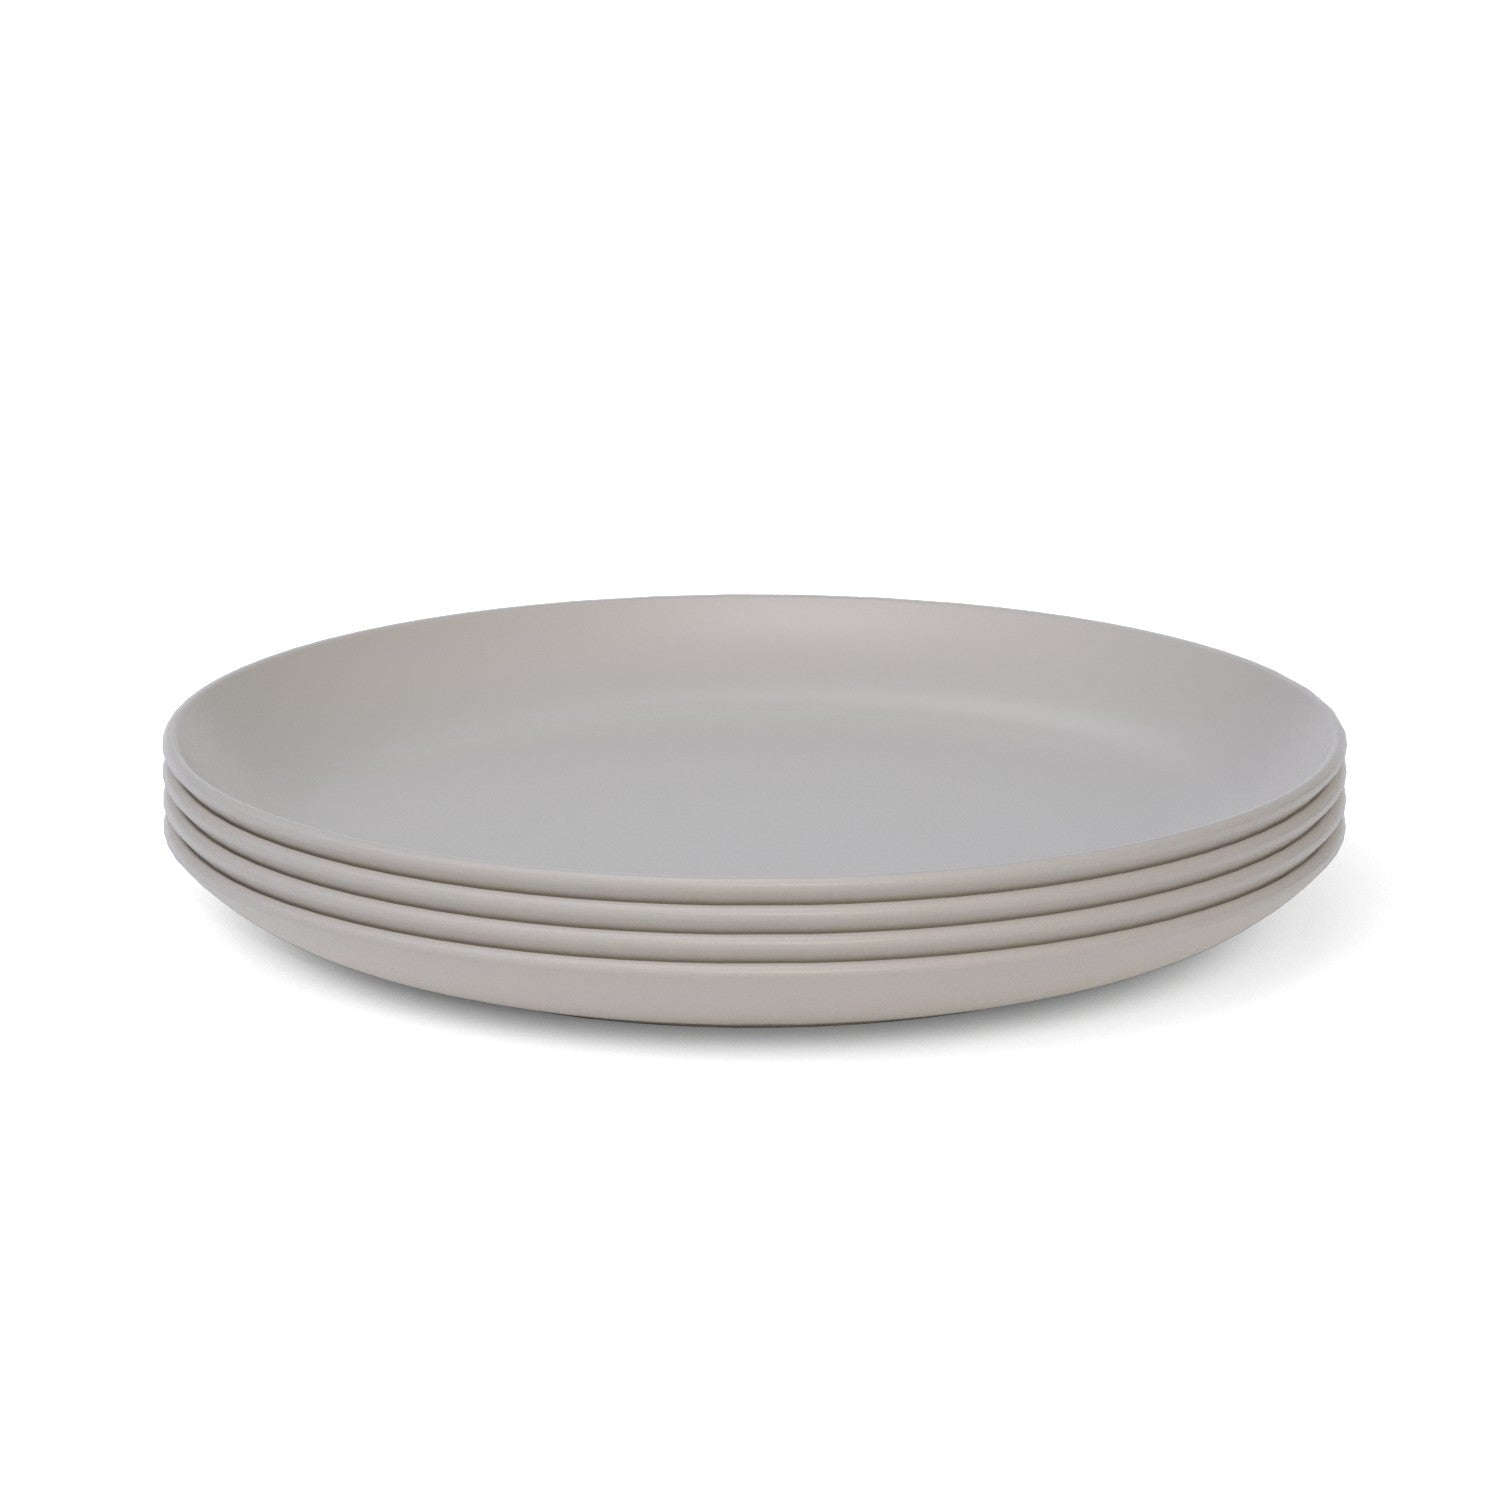 11" Round Dinner Plate Set of 4 - Stone